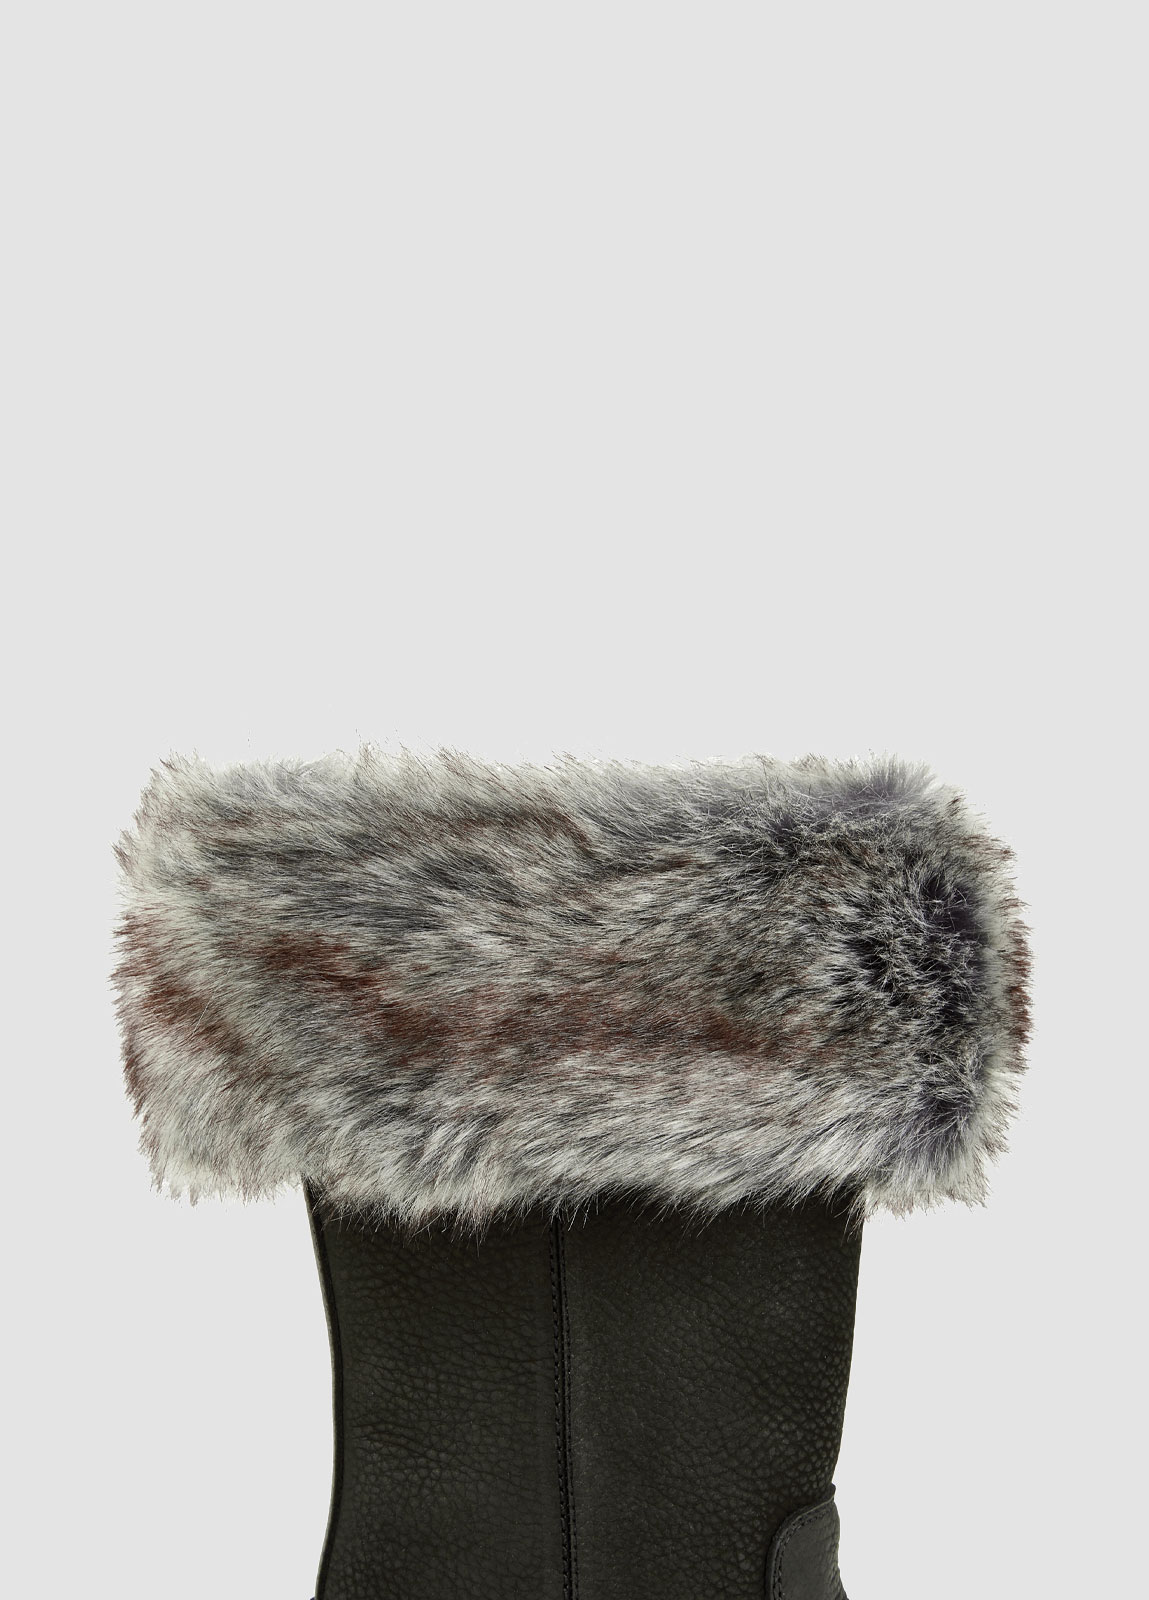 Glenfort Faux Fur Boot Cuff - Sable